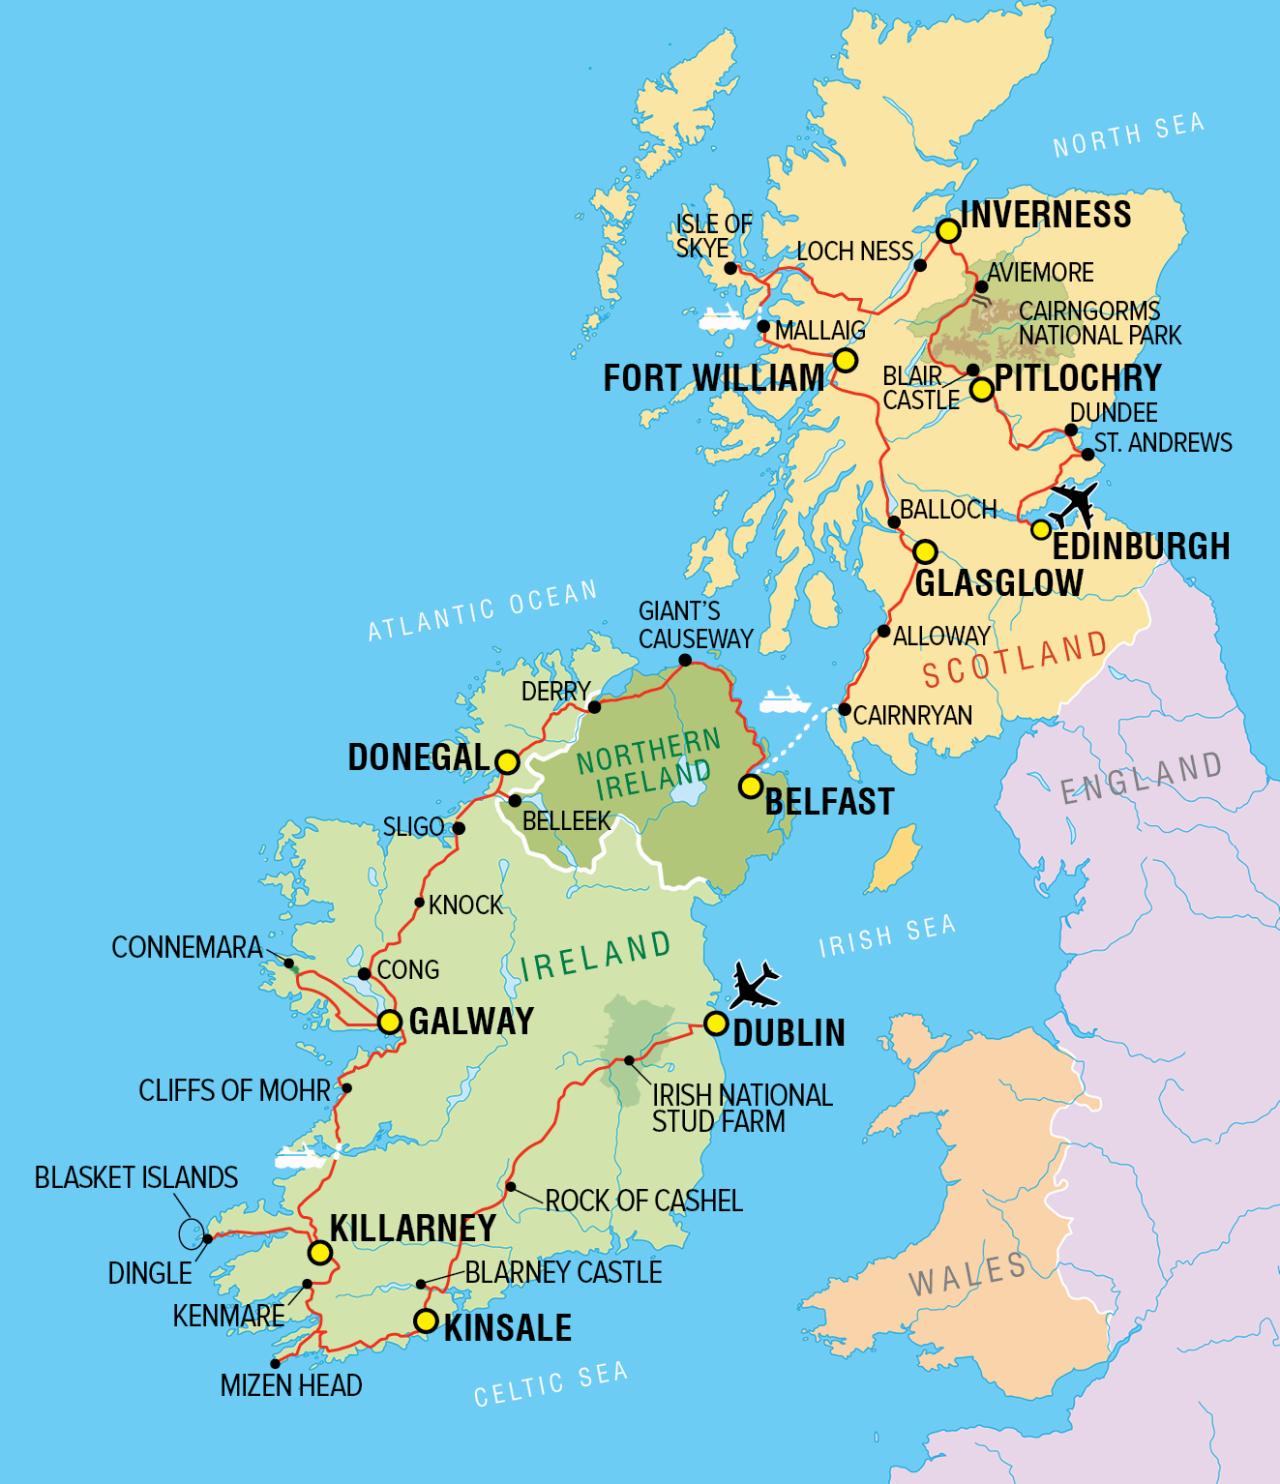 7 Map Of Ireland And Scotland Image Ideas Wallpaper - vrogue.co